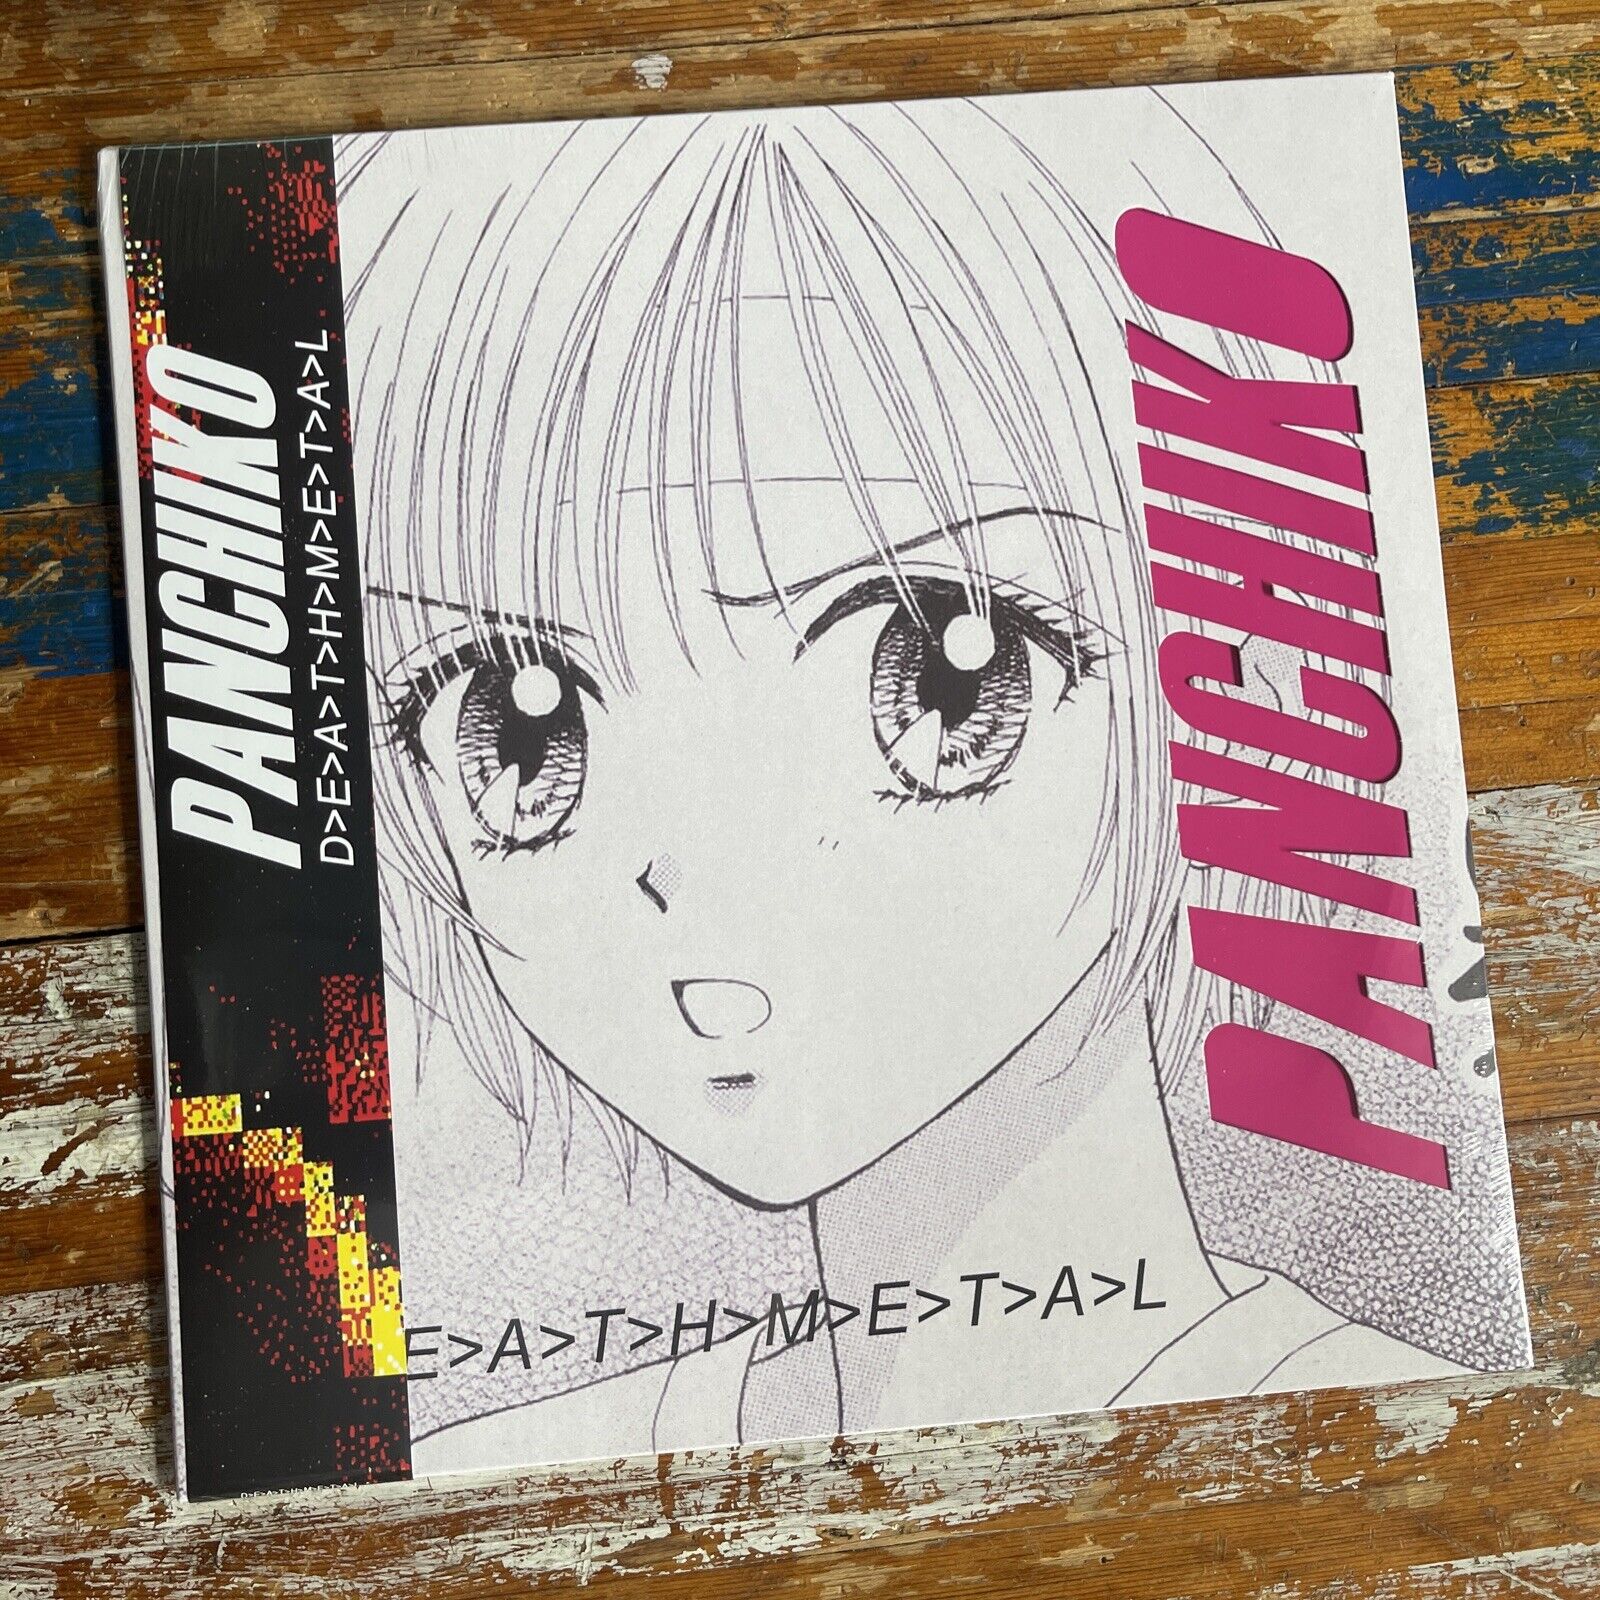 Panchiko - Deathmetal Pink & Cream Vinyl LP RARE Obi 250 LIMITED EDITION